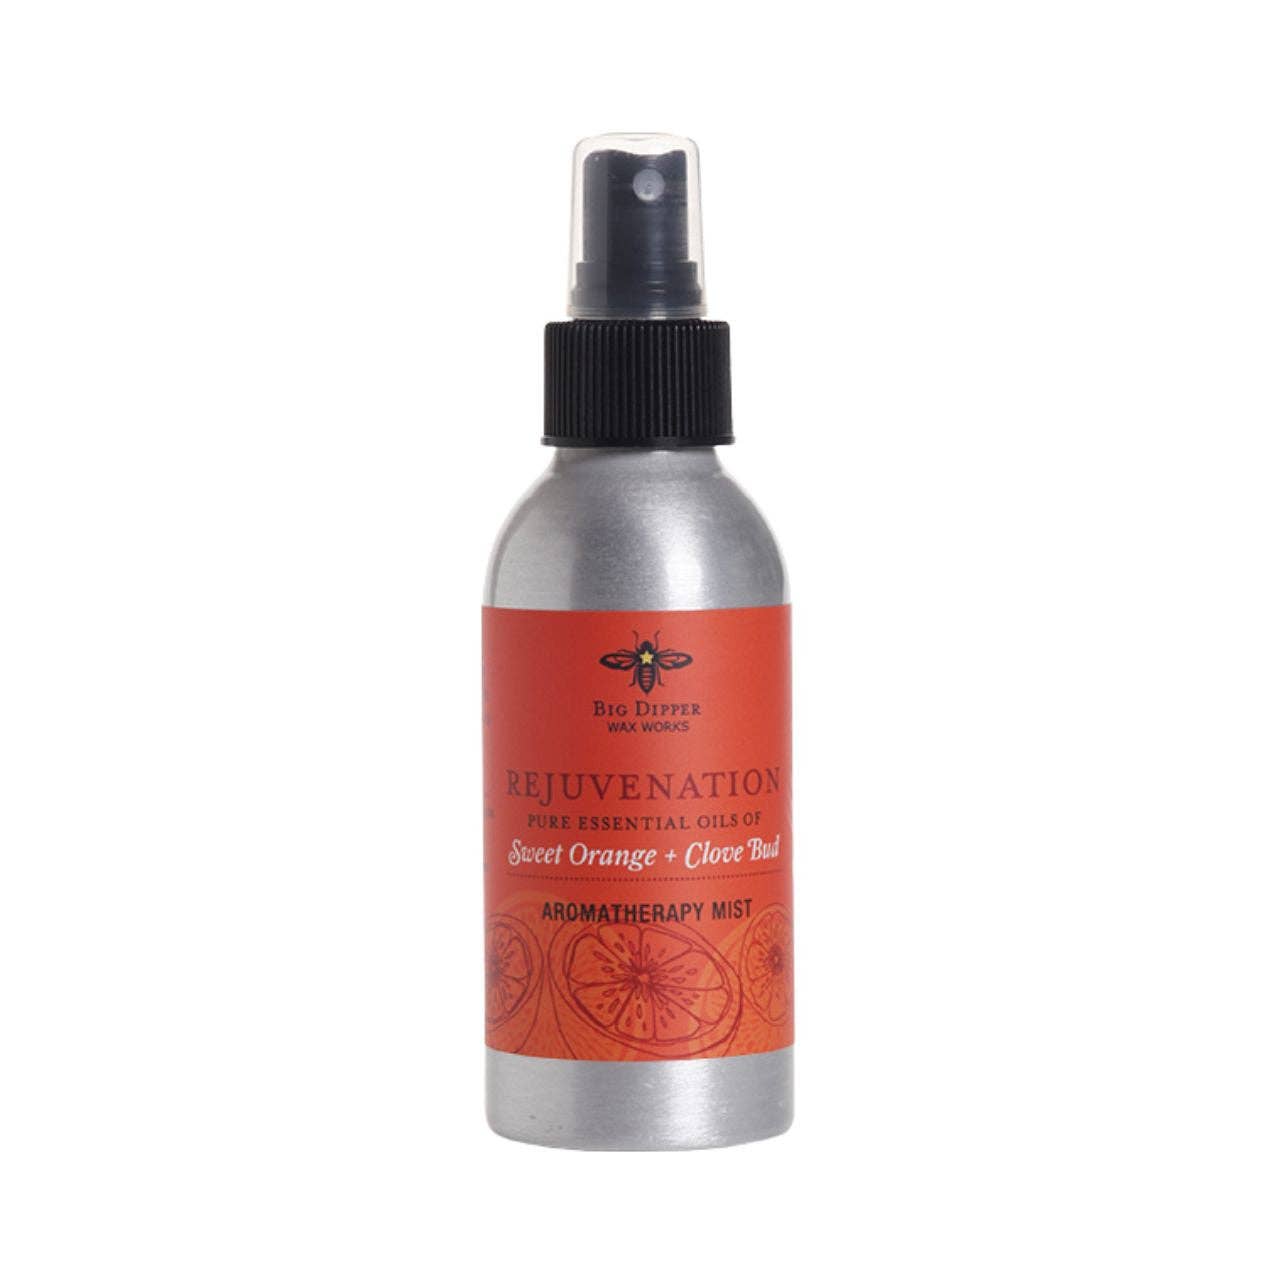 BDWW - Aromatherapy Mist - Rejuvenation - Clove Bud and Sweet Orange